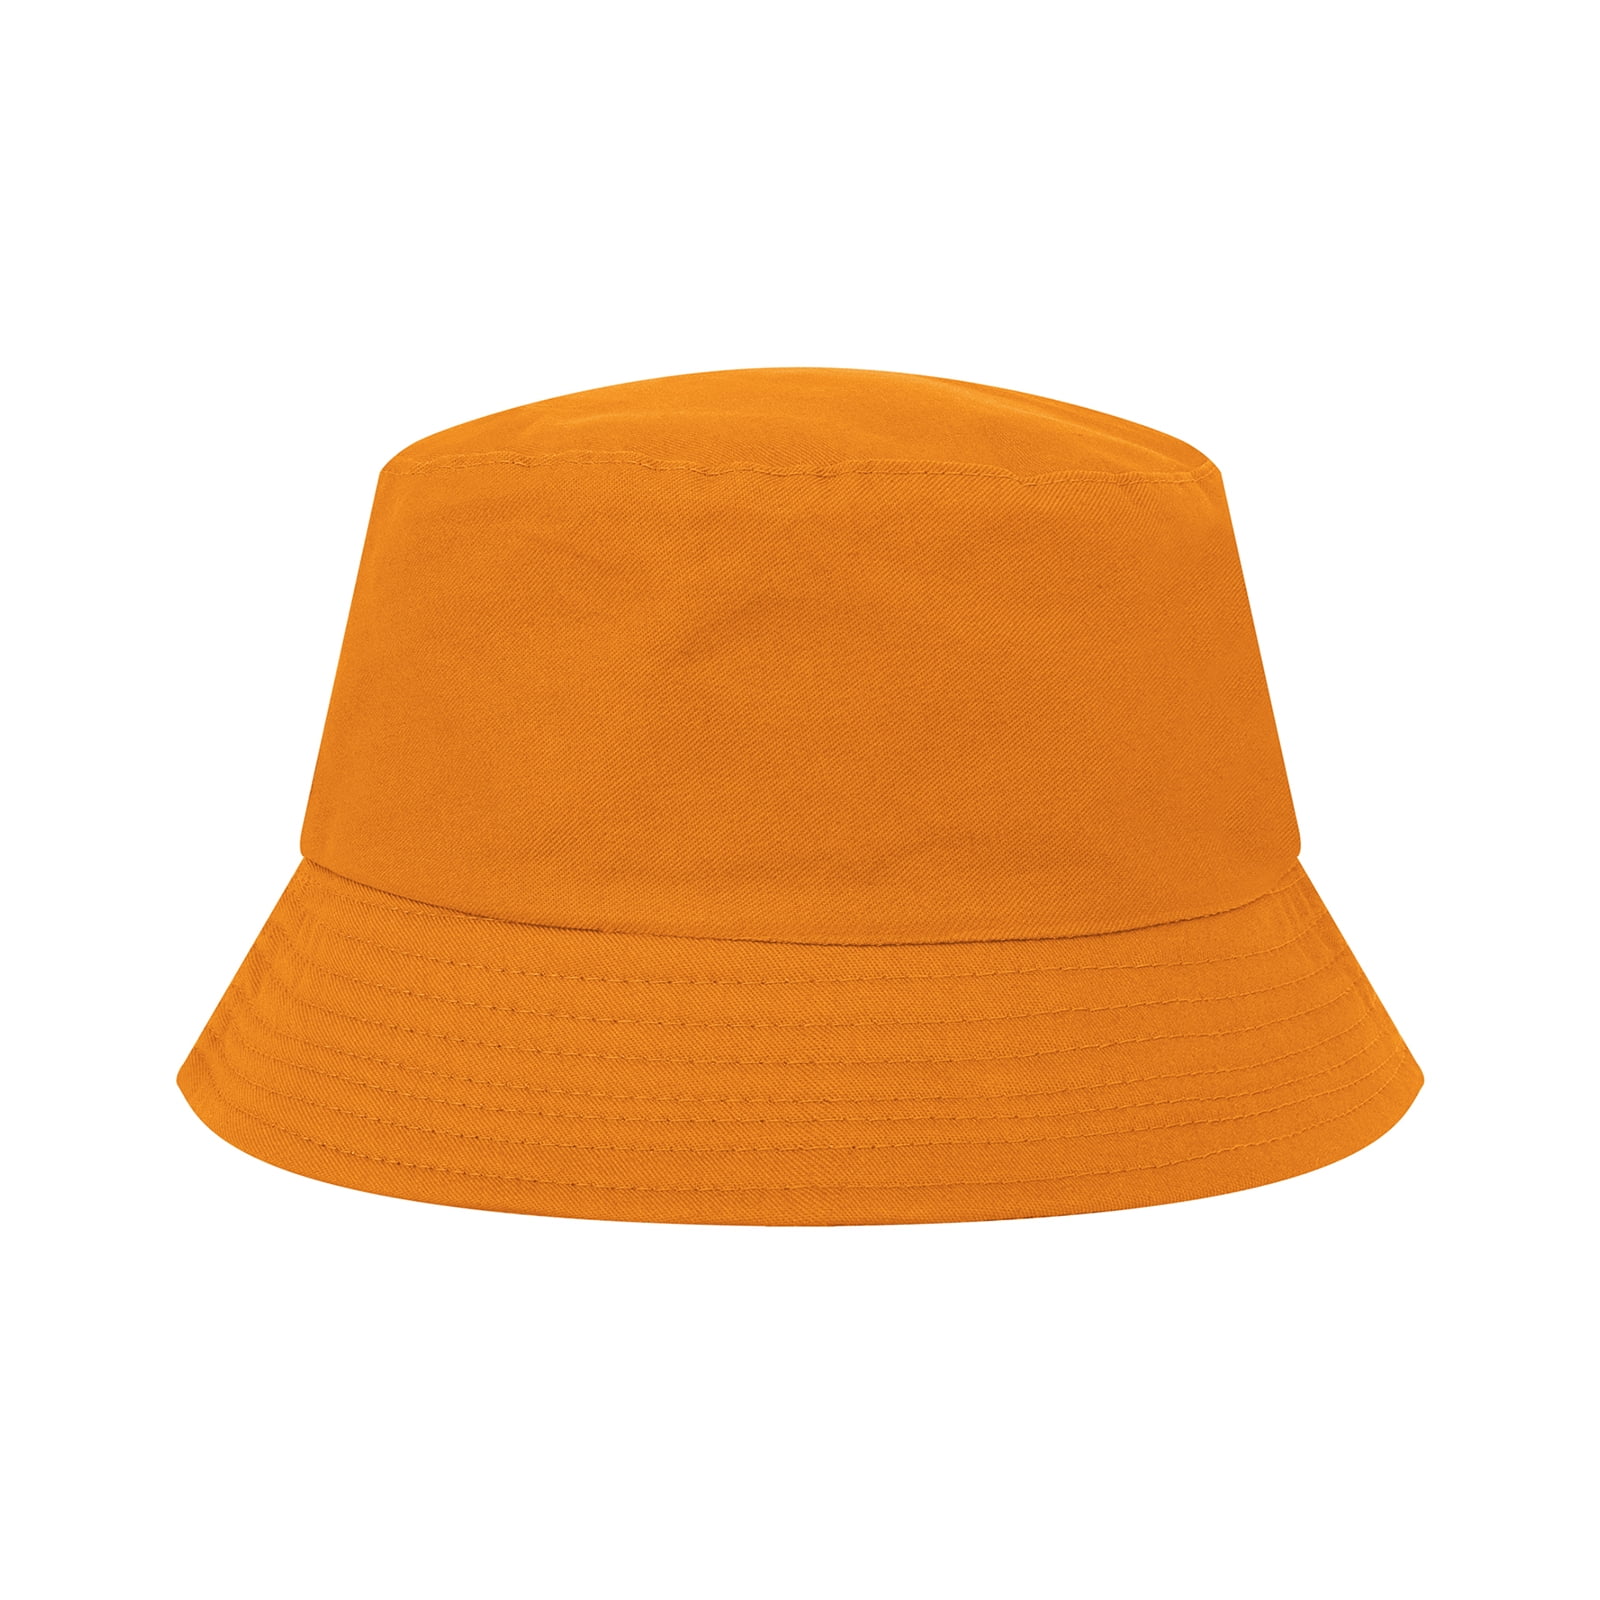 Toptie Classic Kids Cotton Bucket Hat Summer Outdoor UV Sun Protection Hat  for Boys Girls-Orange 